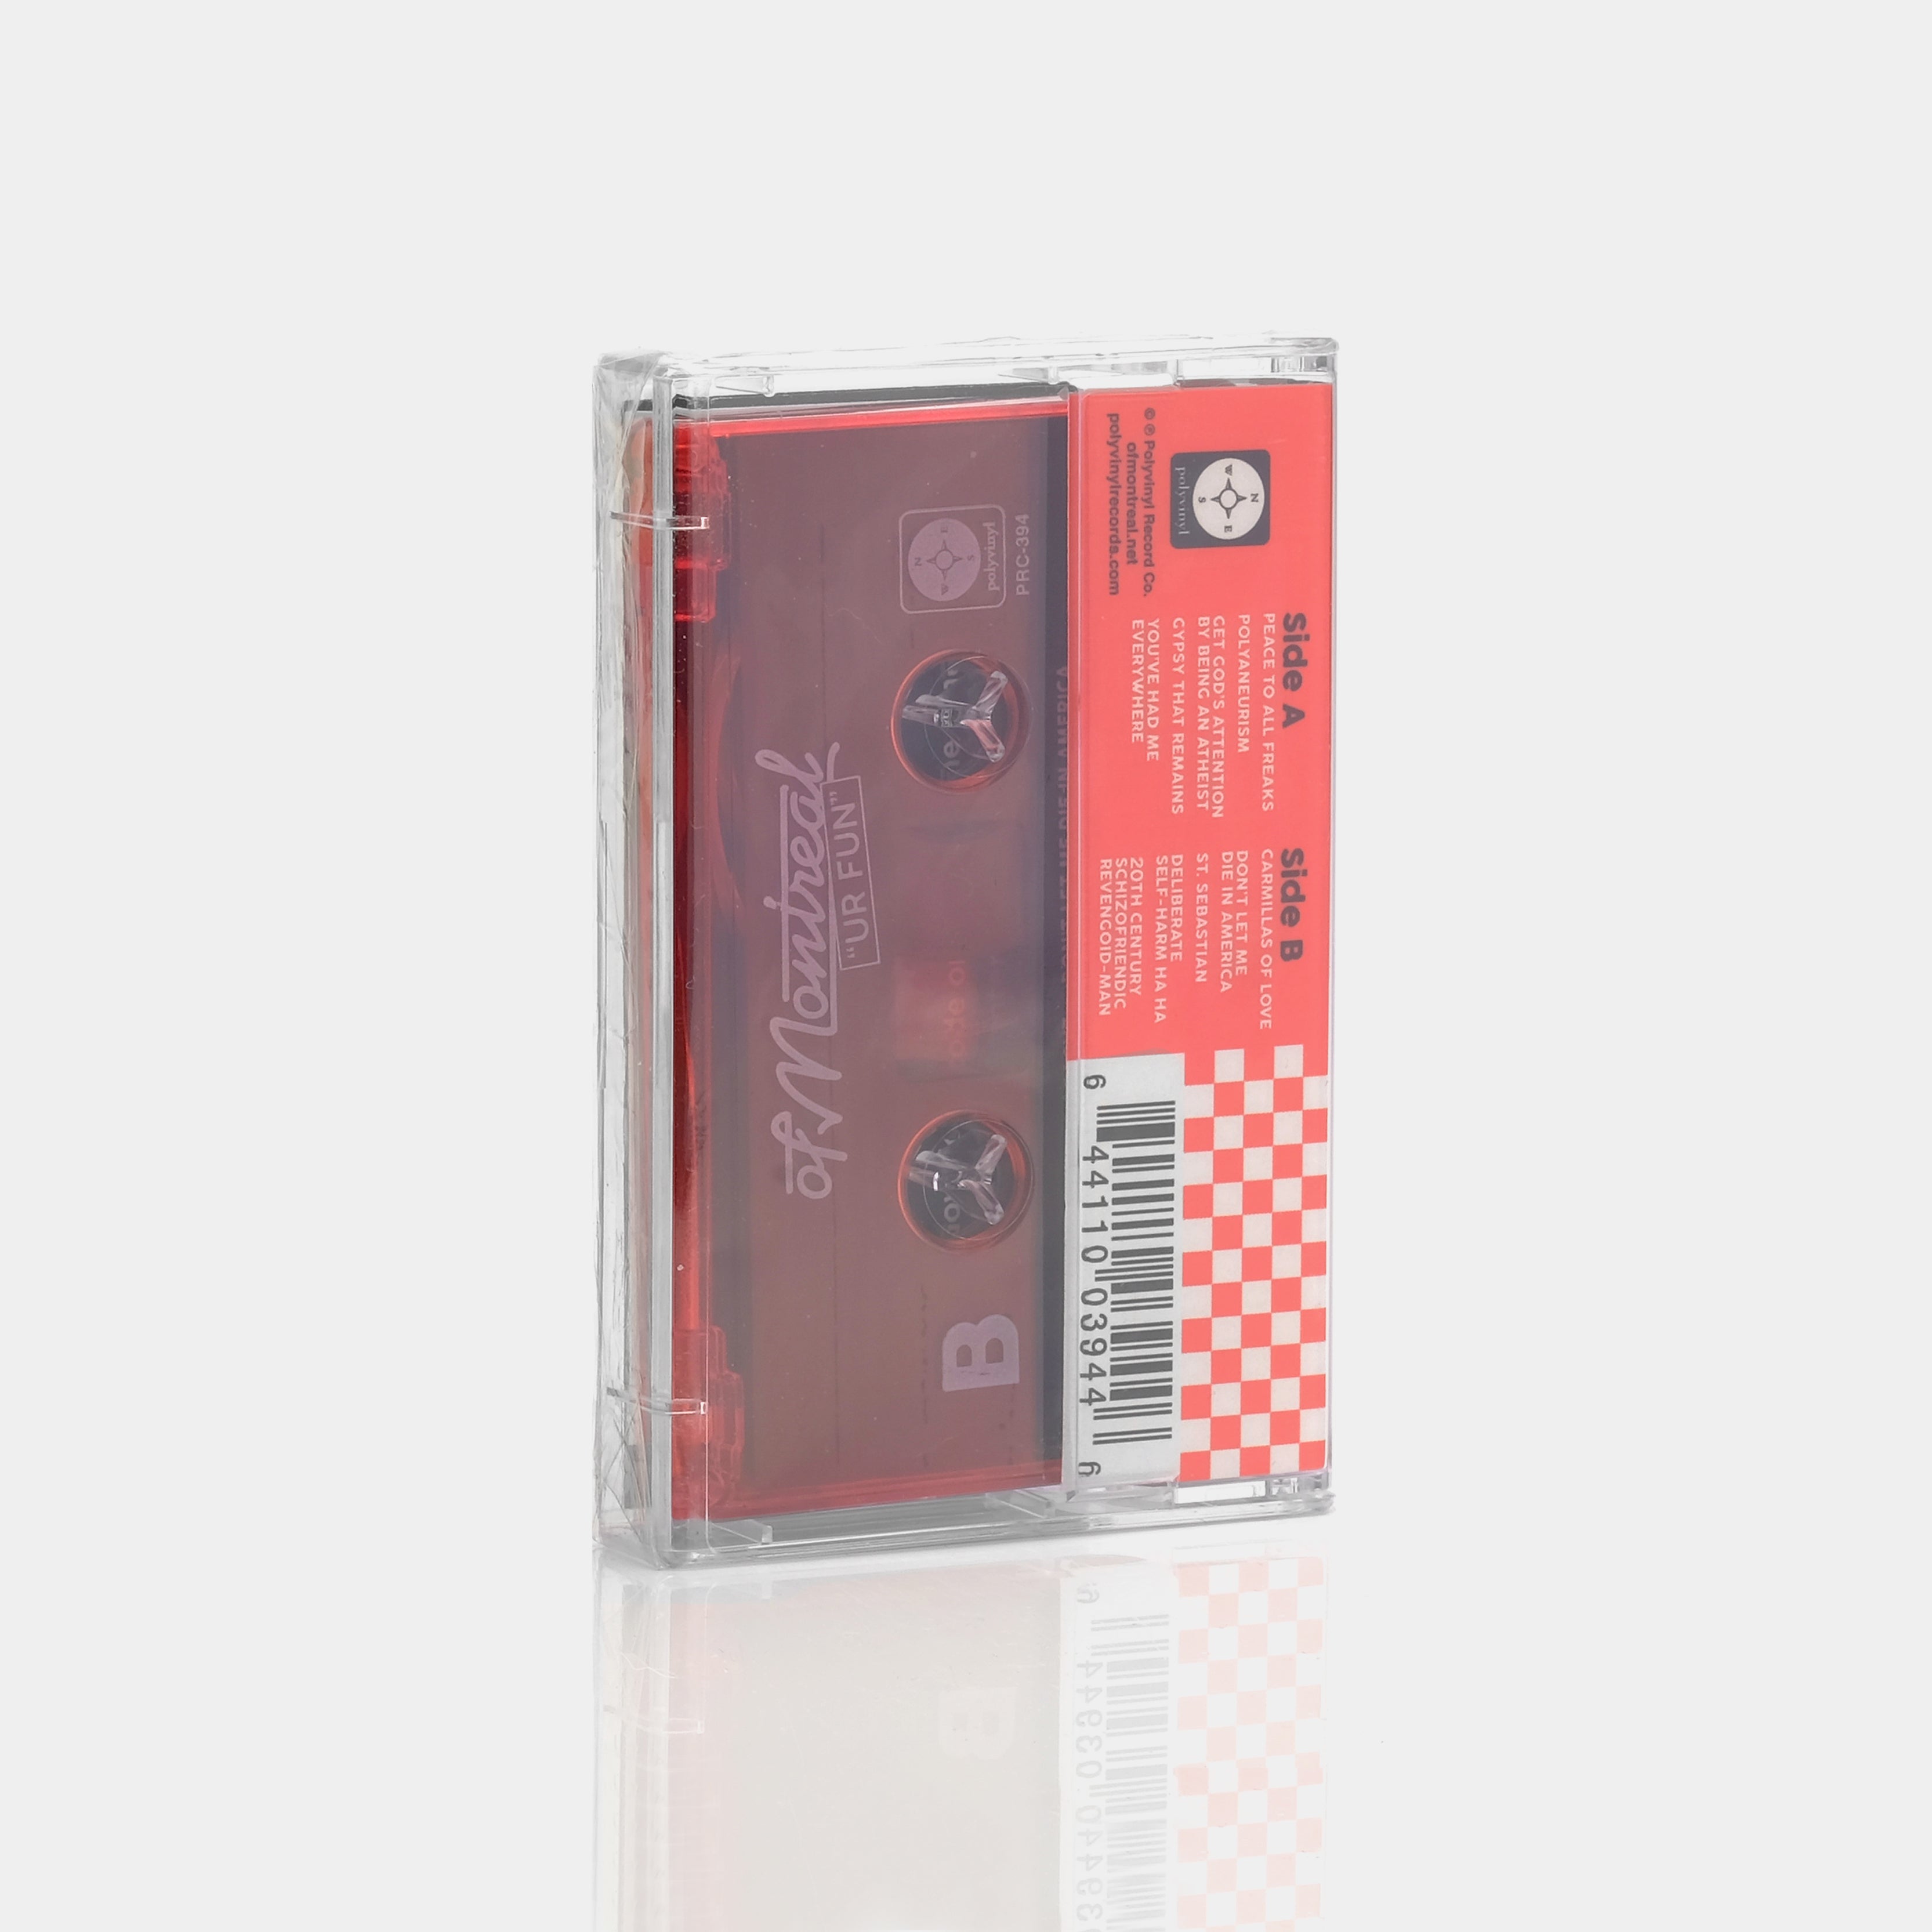 Of Montreal - UR Fun Cassette Tape